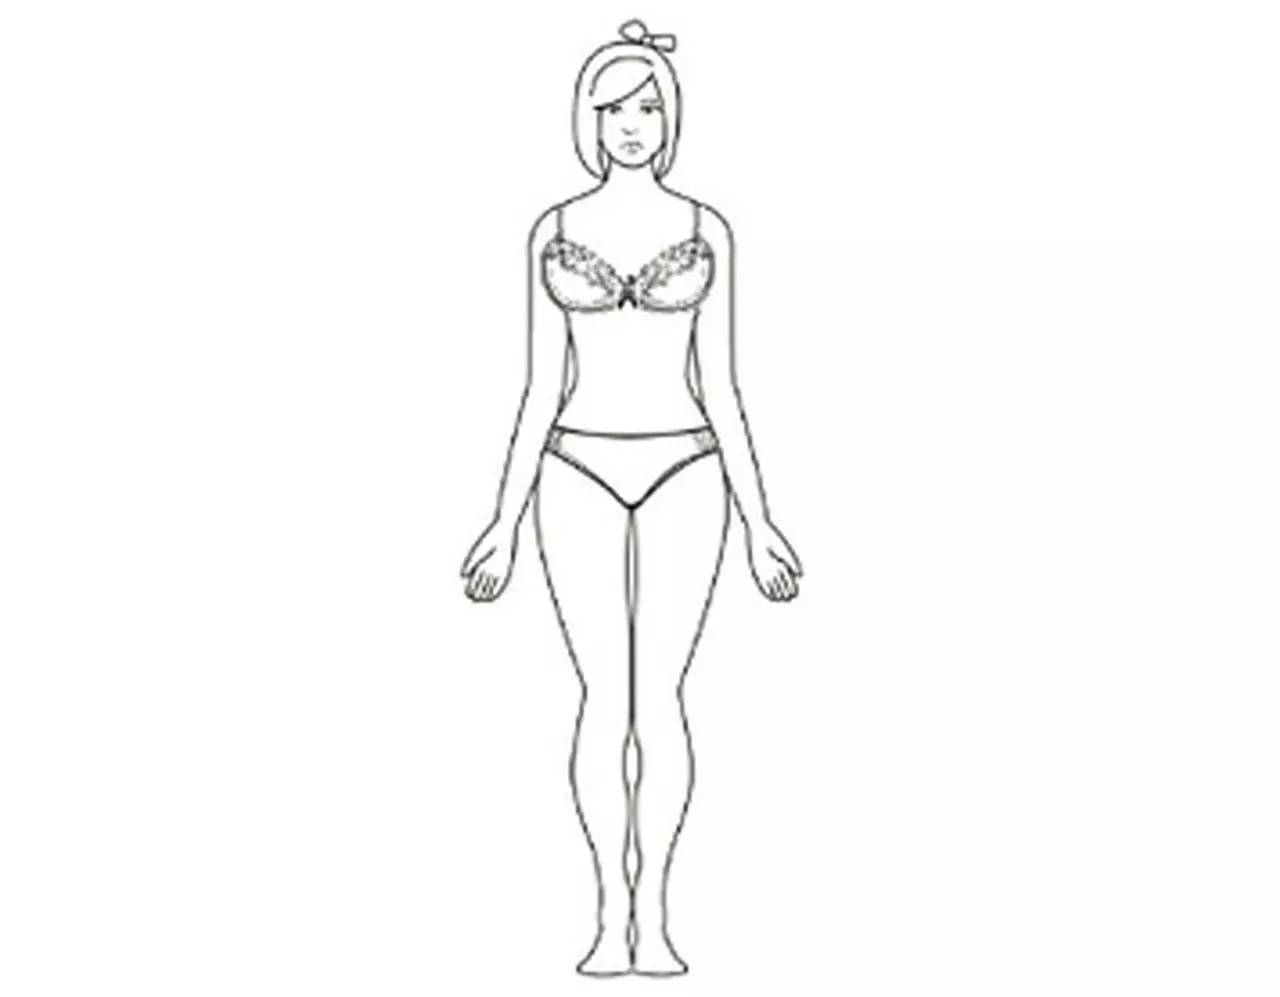 x型身材也称沙漏形,是女性理想的身材, 拥有s曲线.